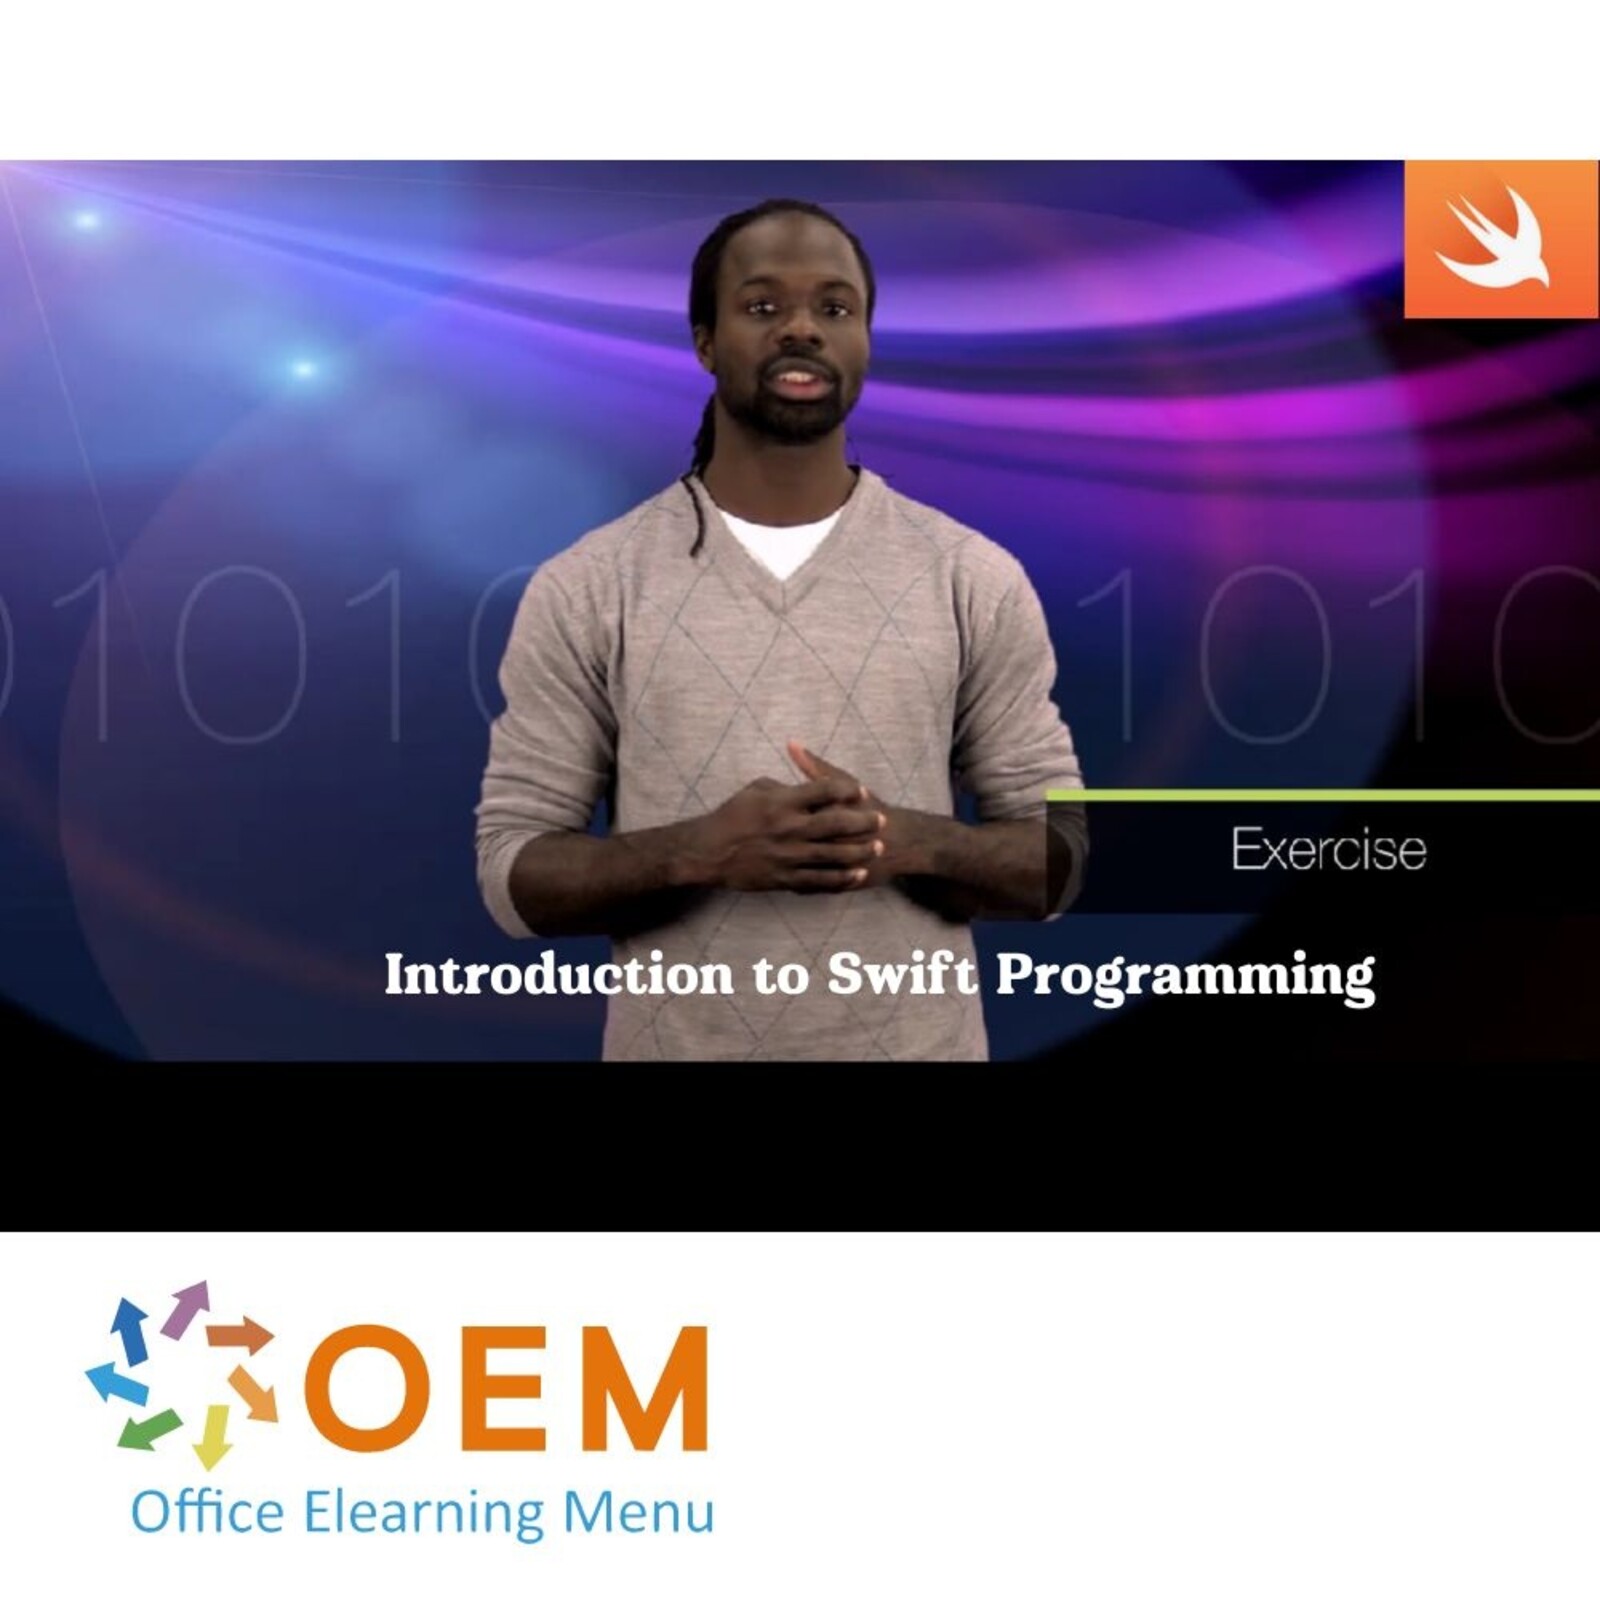 Swift Introduction to Swift Programming Training